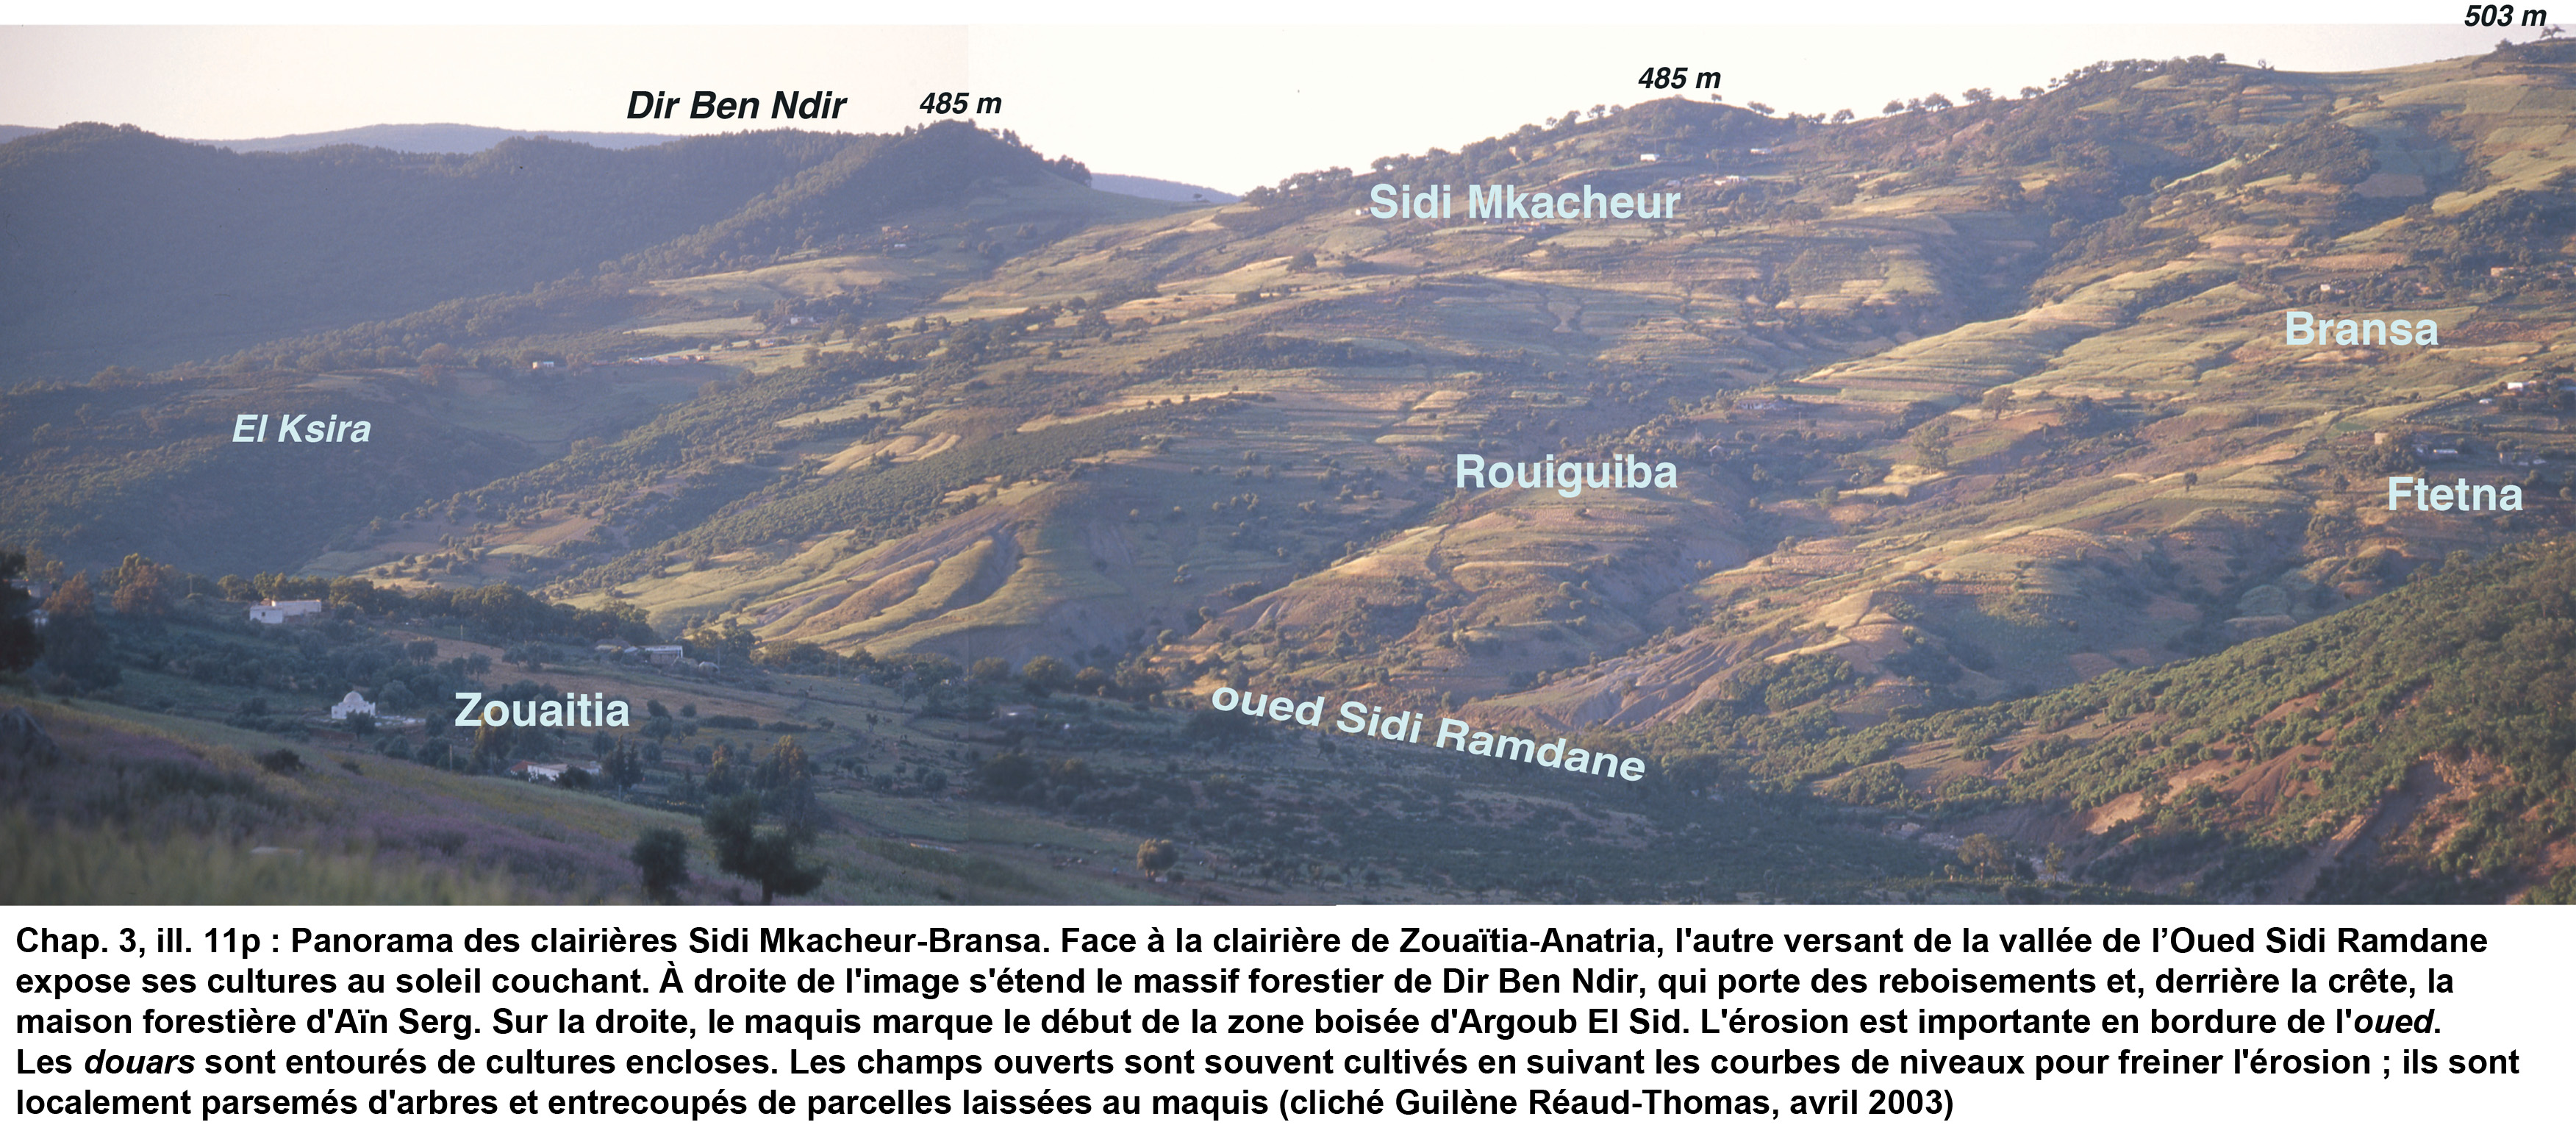 11p- Panorama des clairières Sidi Mkacheur - Bransa